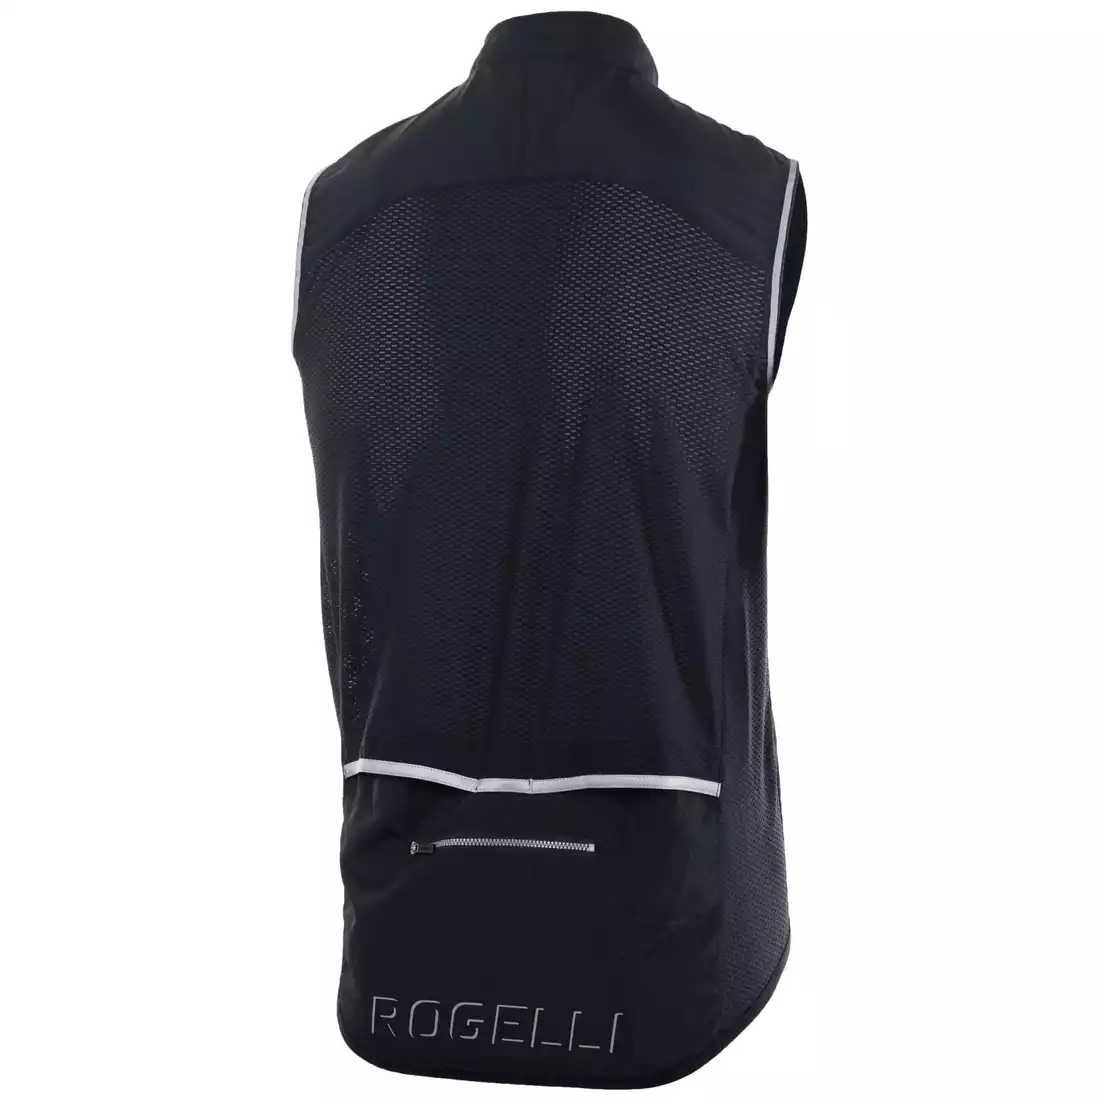 Rogelli CORE pánska cyklistická vesta, čierna